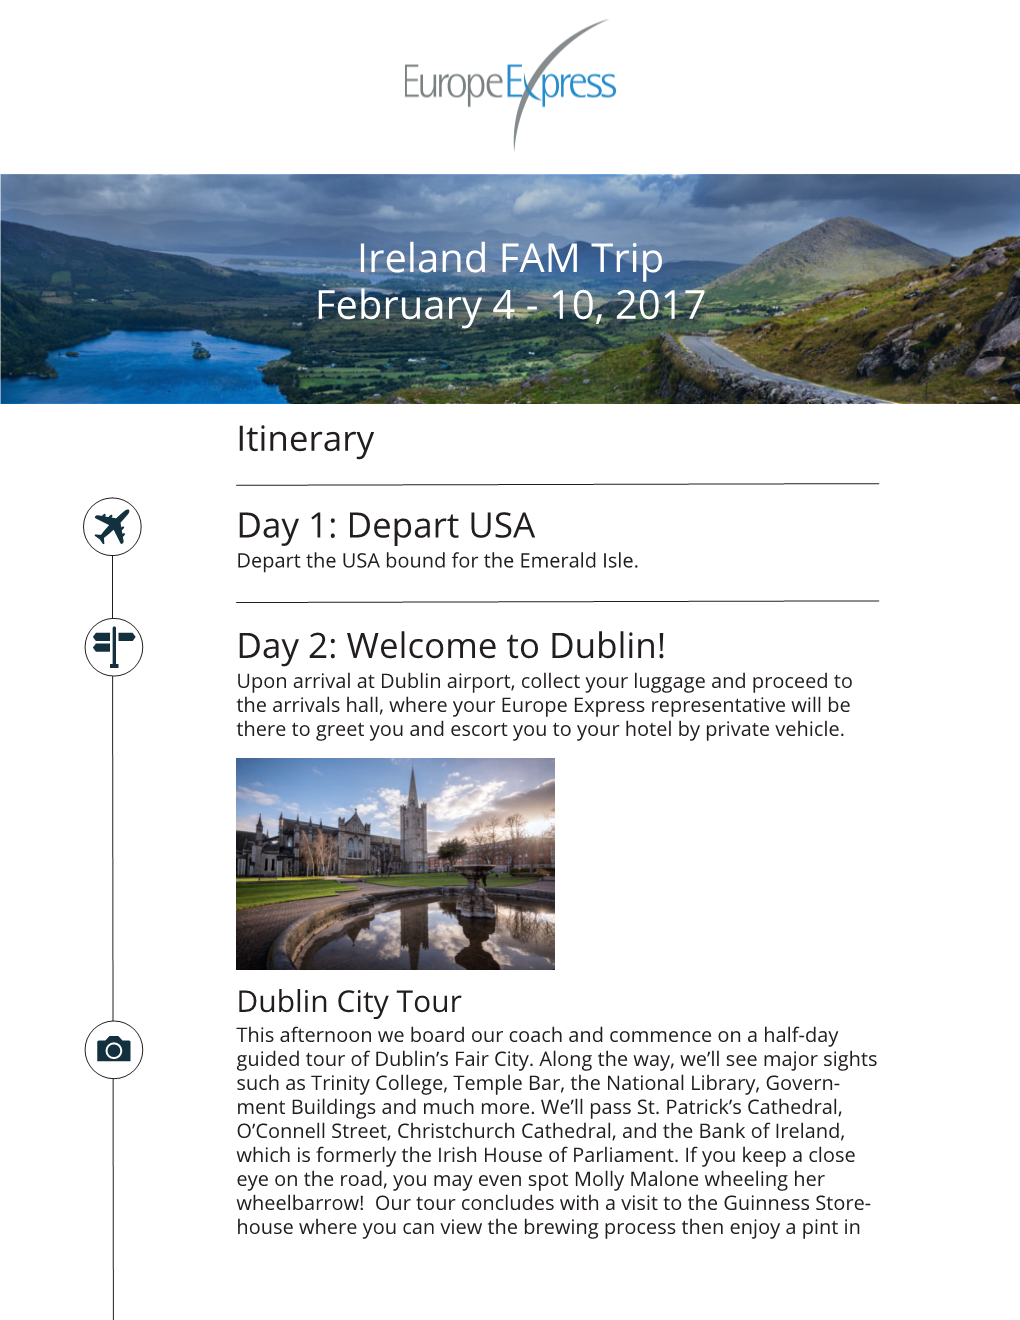 Ireland FAM Trip February 4 - 10, 2017